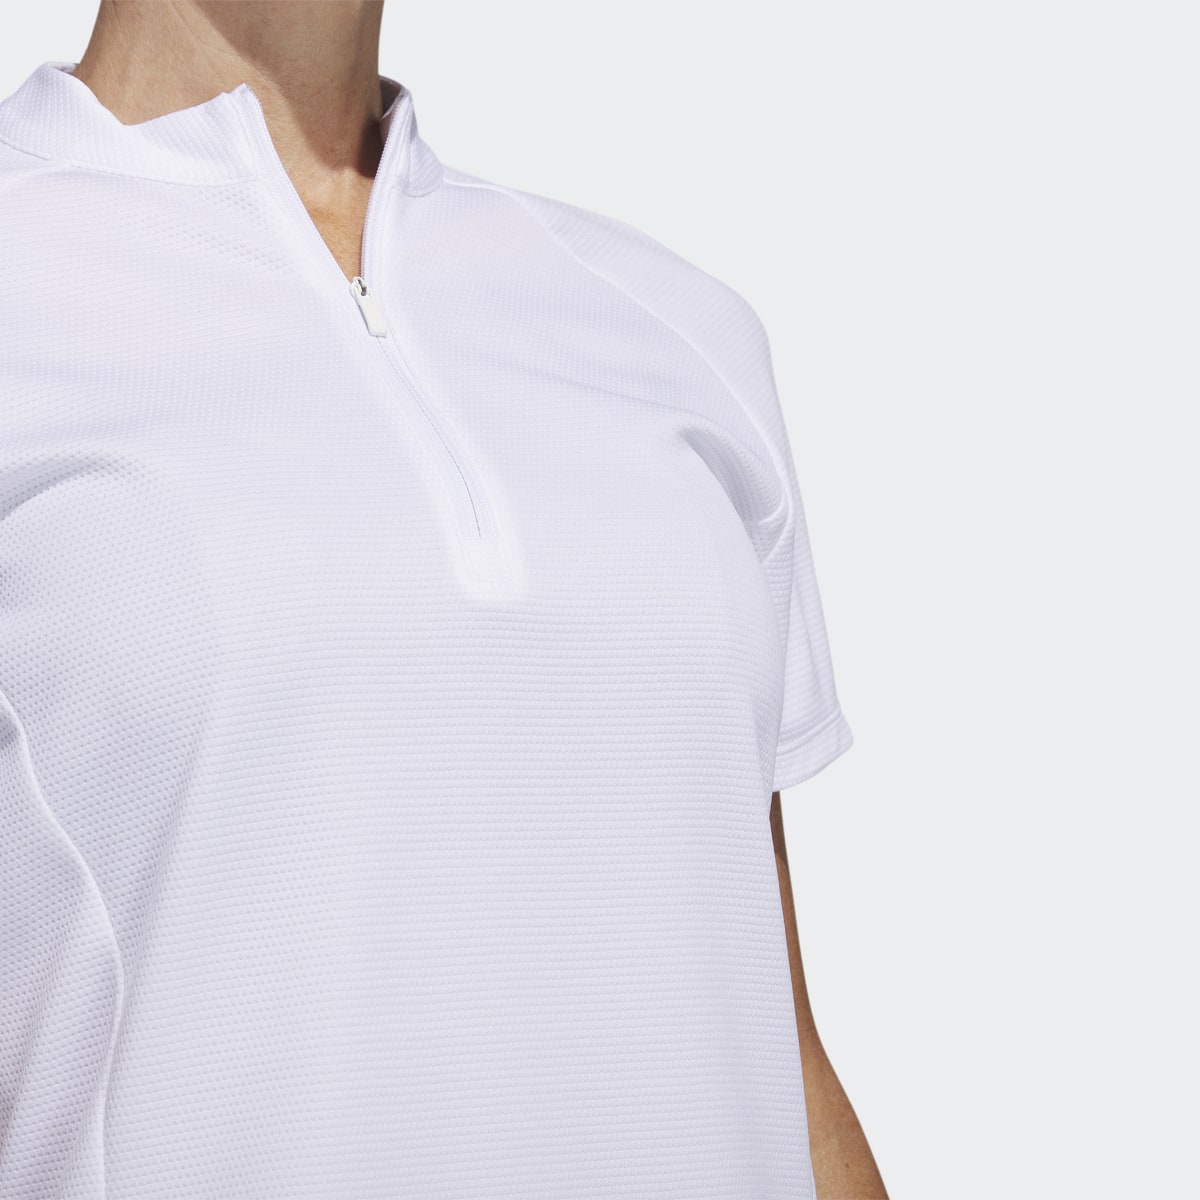 Adidas Textured Golf Polo Shirt. 6